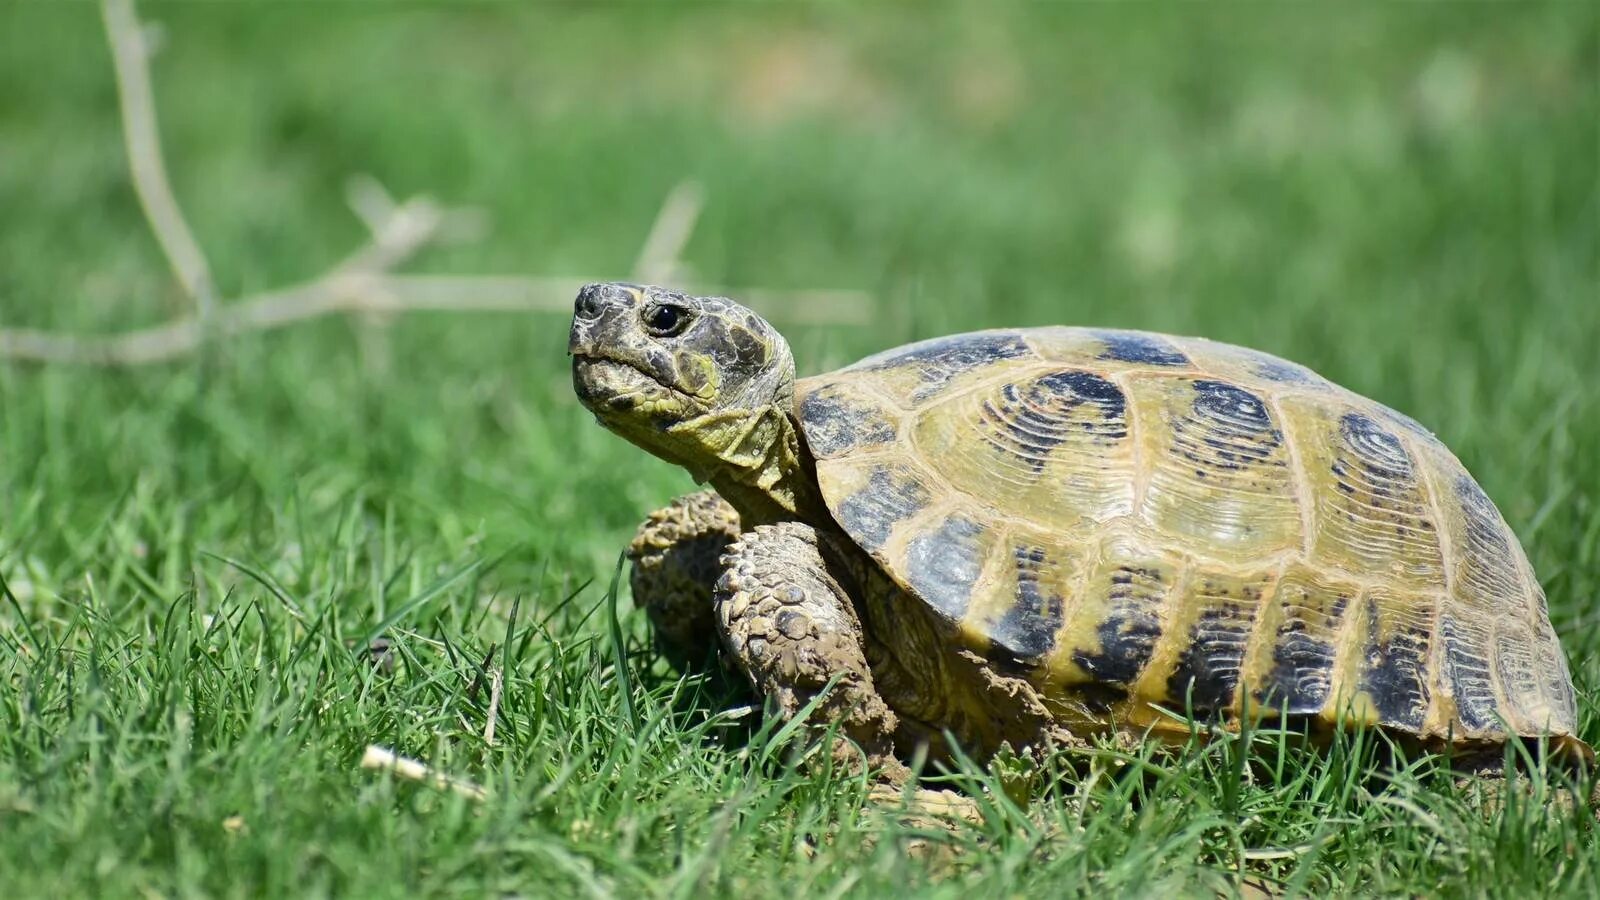 T turtle. Среднеазиатская черепаха. Agrionemys (Testudo) horsfieldi. Среднеазиатская черепаха трехголовые. Среднеазиатская черепаха гуччи.